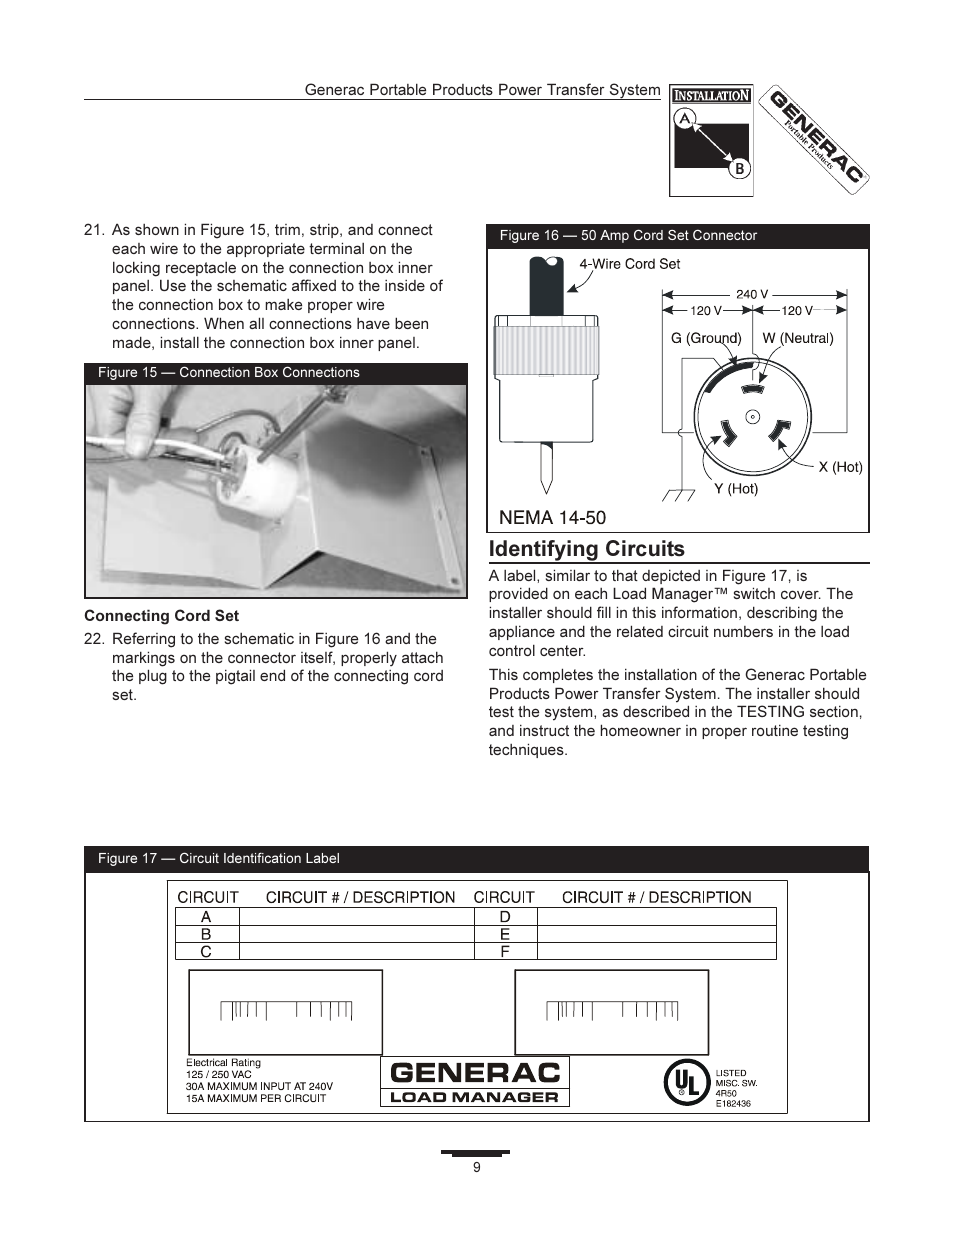 Identifying circuits | Generac 1403-0 User Manual | Page 9 / 16